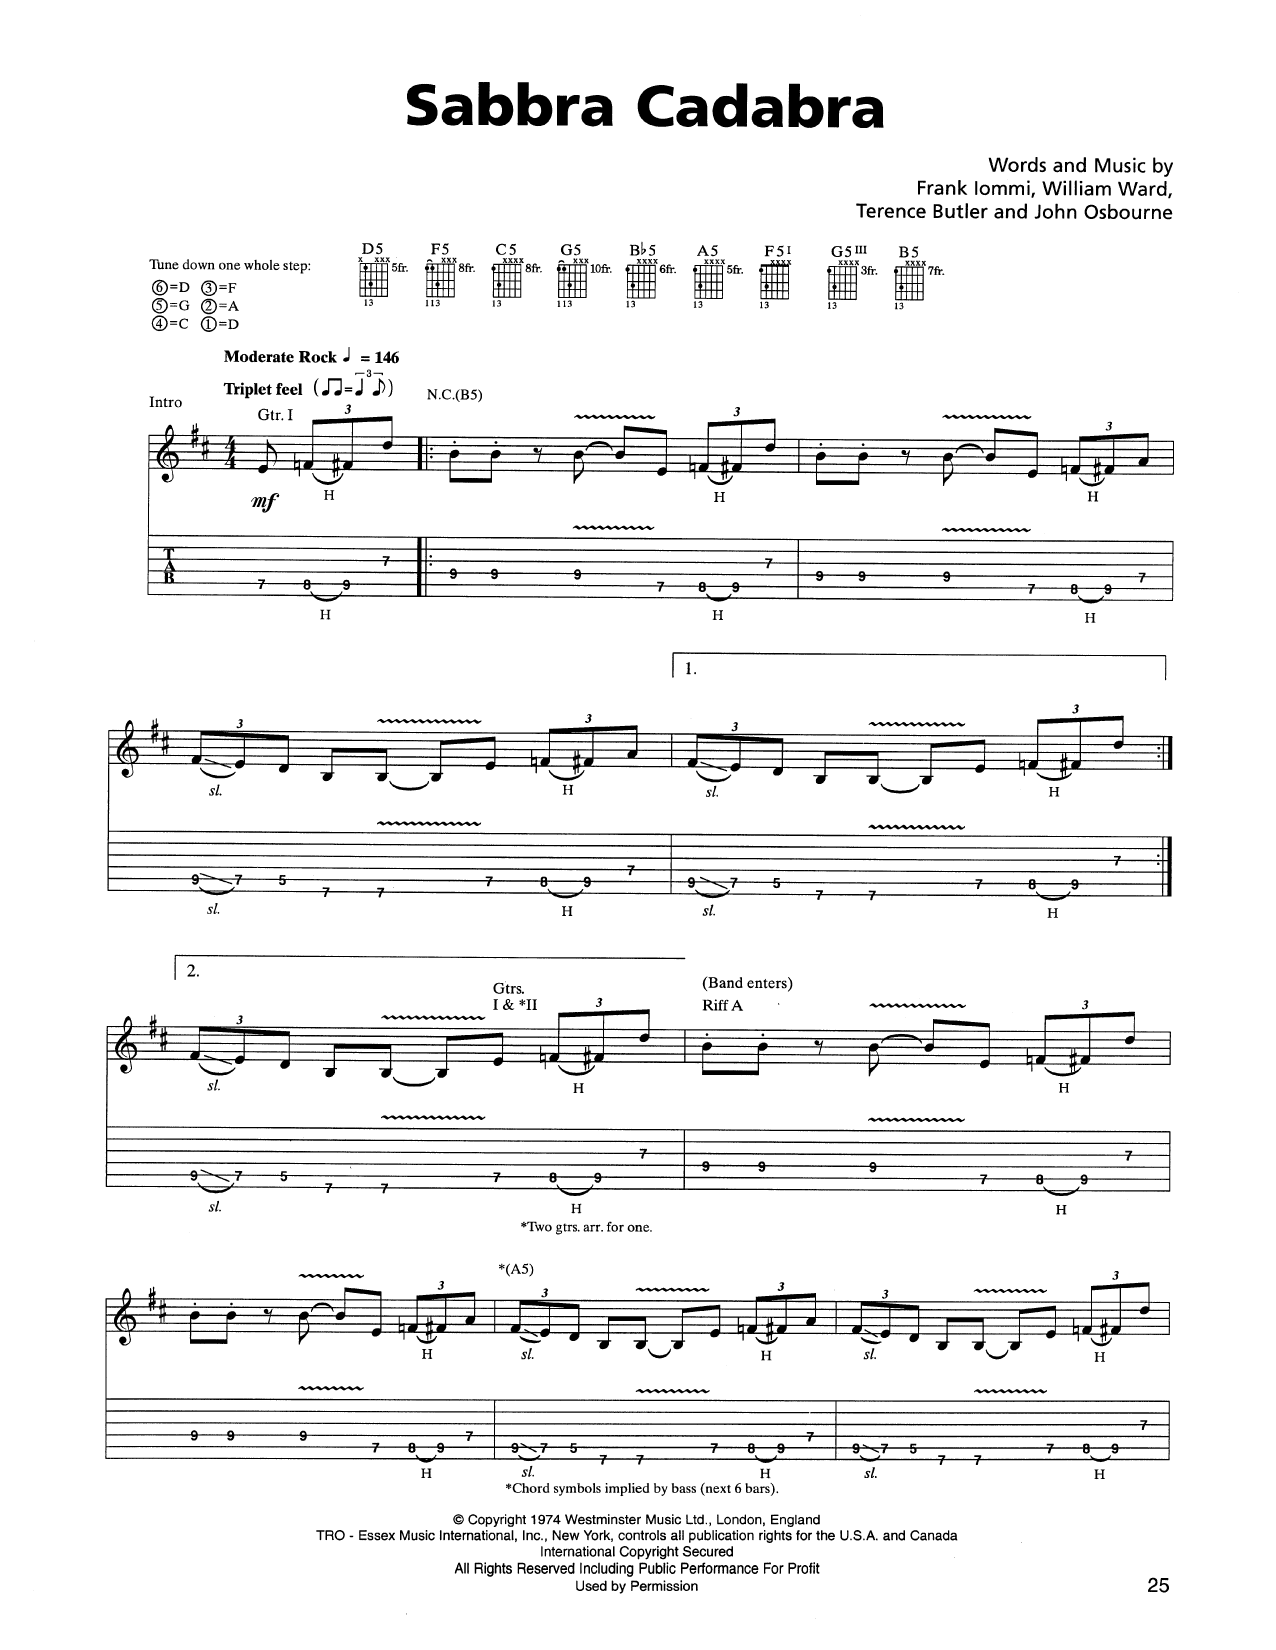 Download Metallica Sabbra Cadabra Sheet Music and learn how to play Bass Guitar Tab PDF digital score in minutes